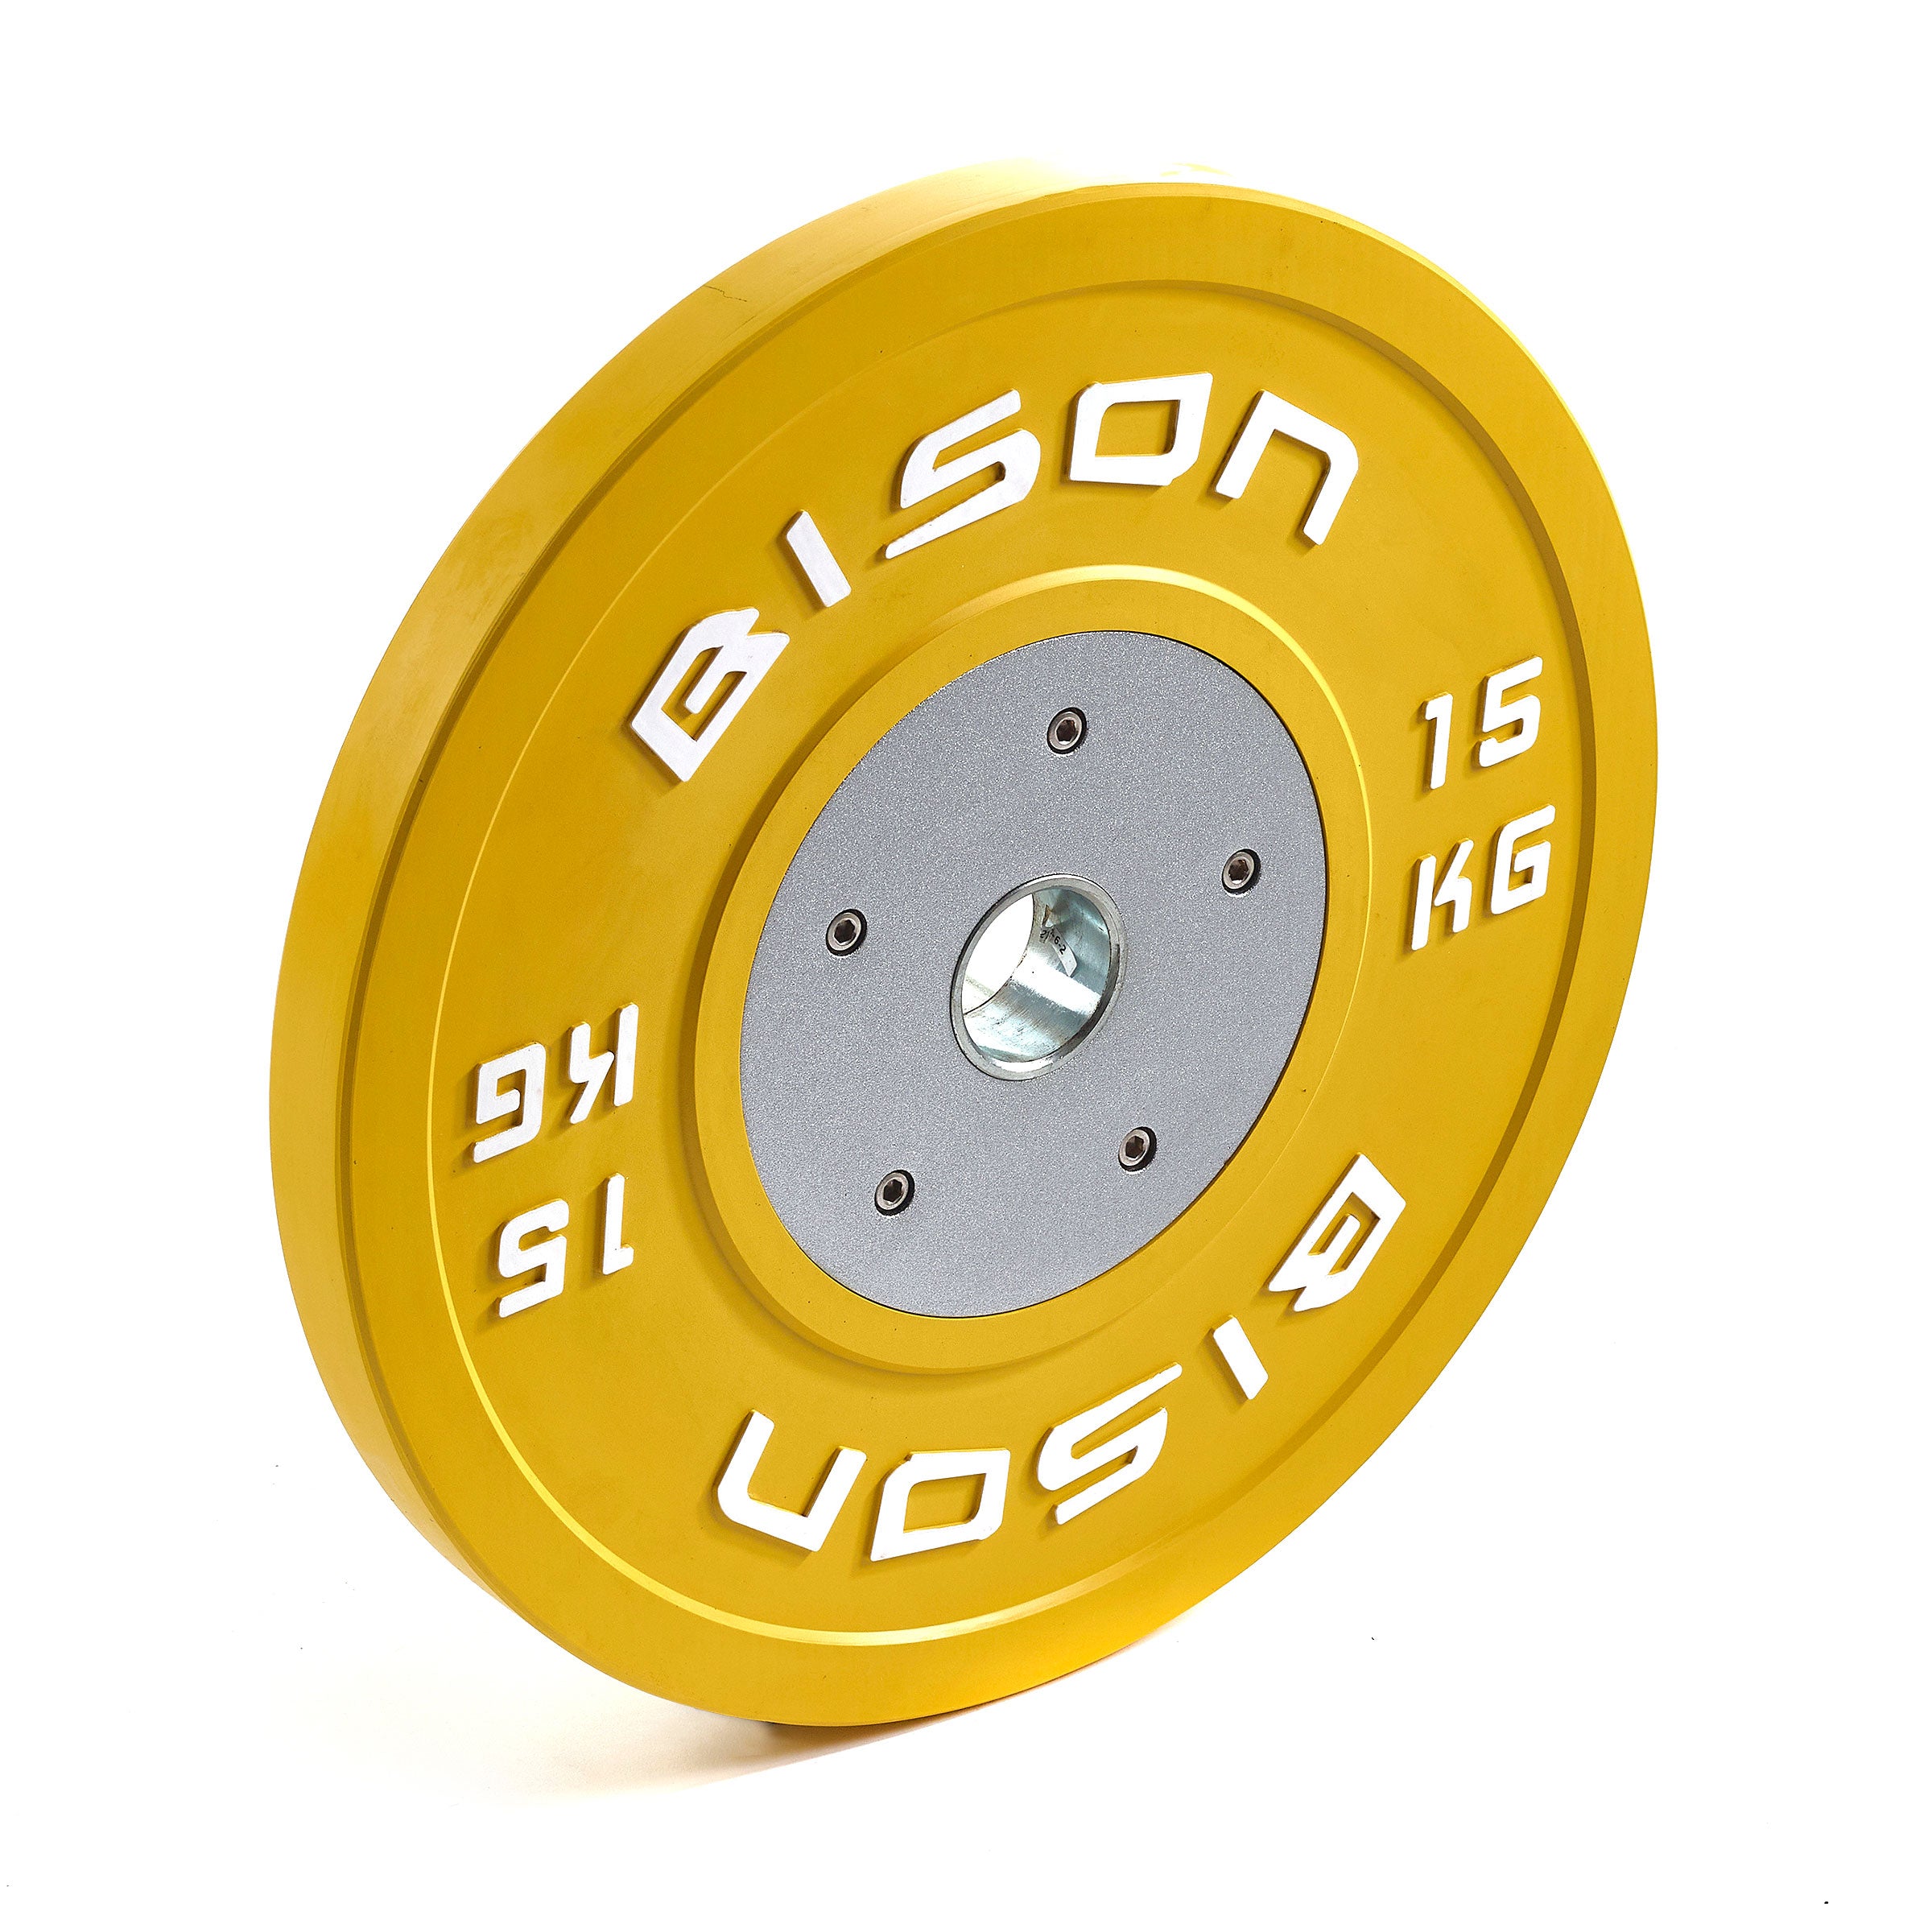 Bison Colour Olympic Competition Bumper Plates 140kg Set - Wolverson Fitness